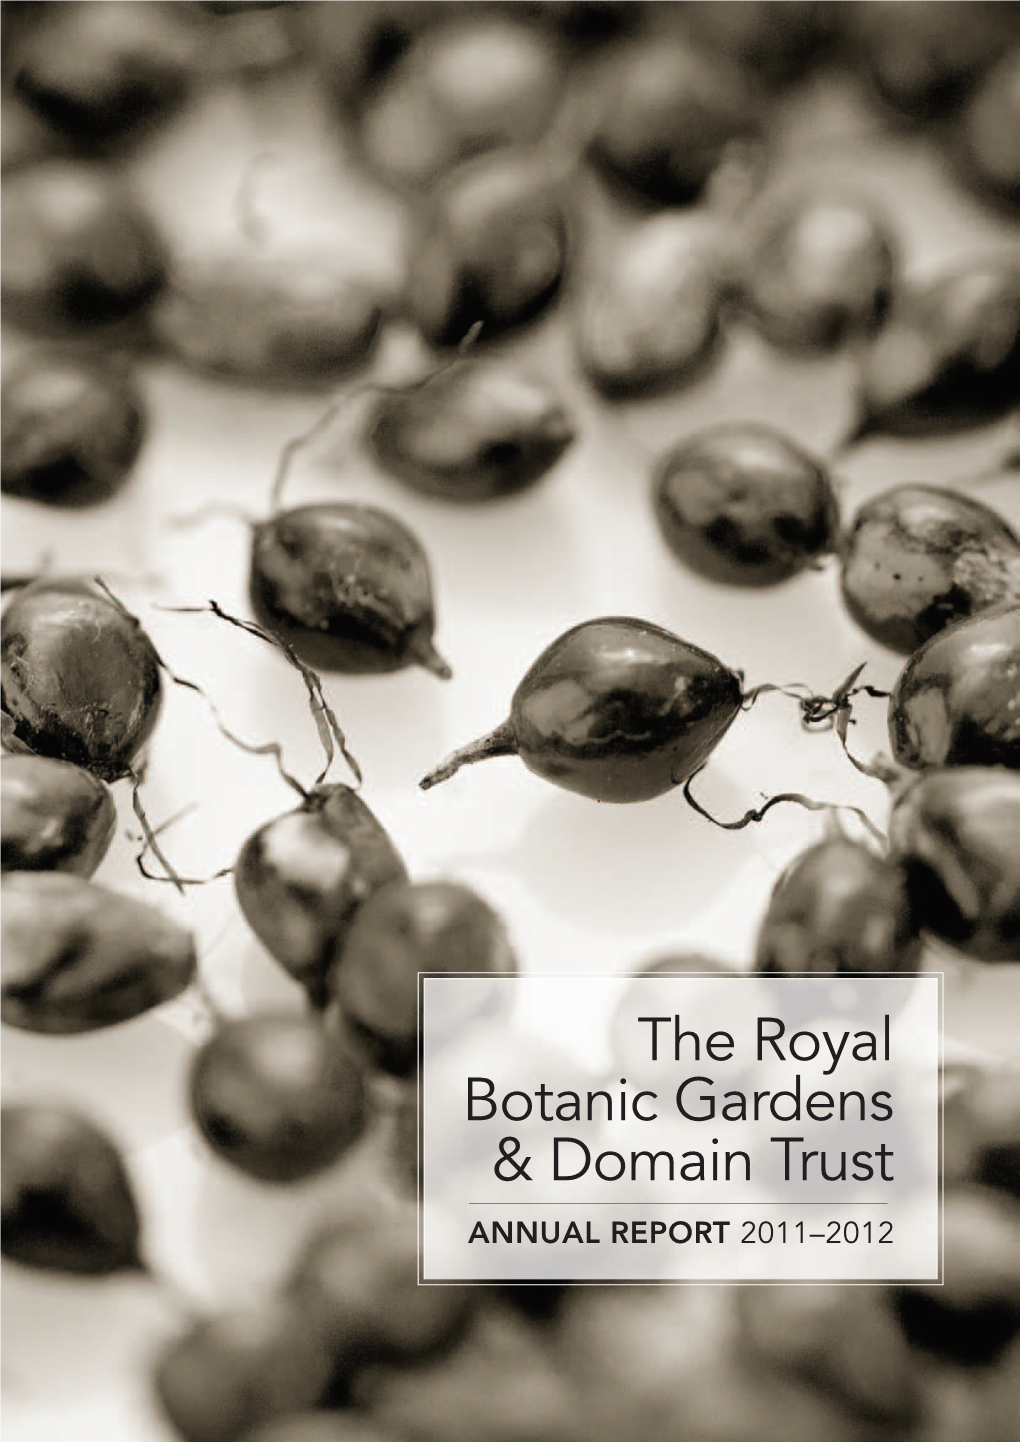 The Royal Botanic Gardens & Domain Trust